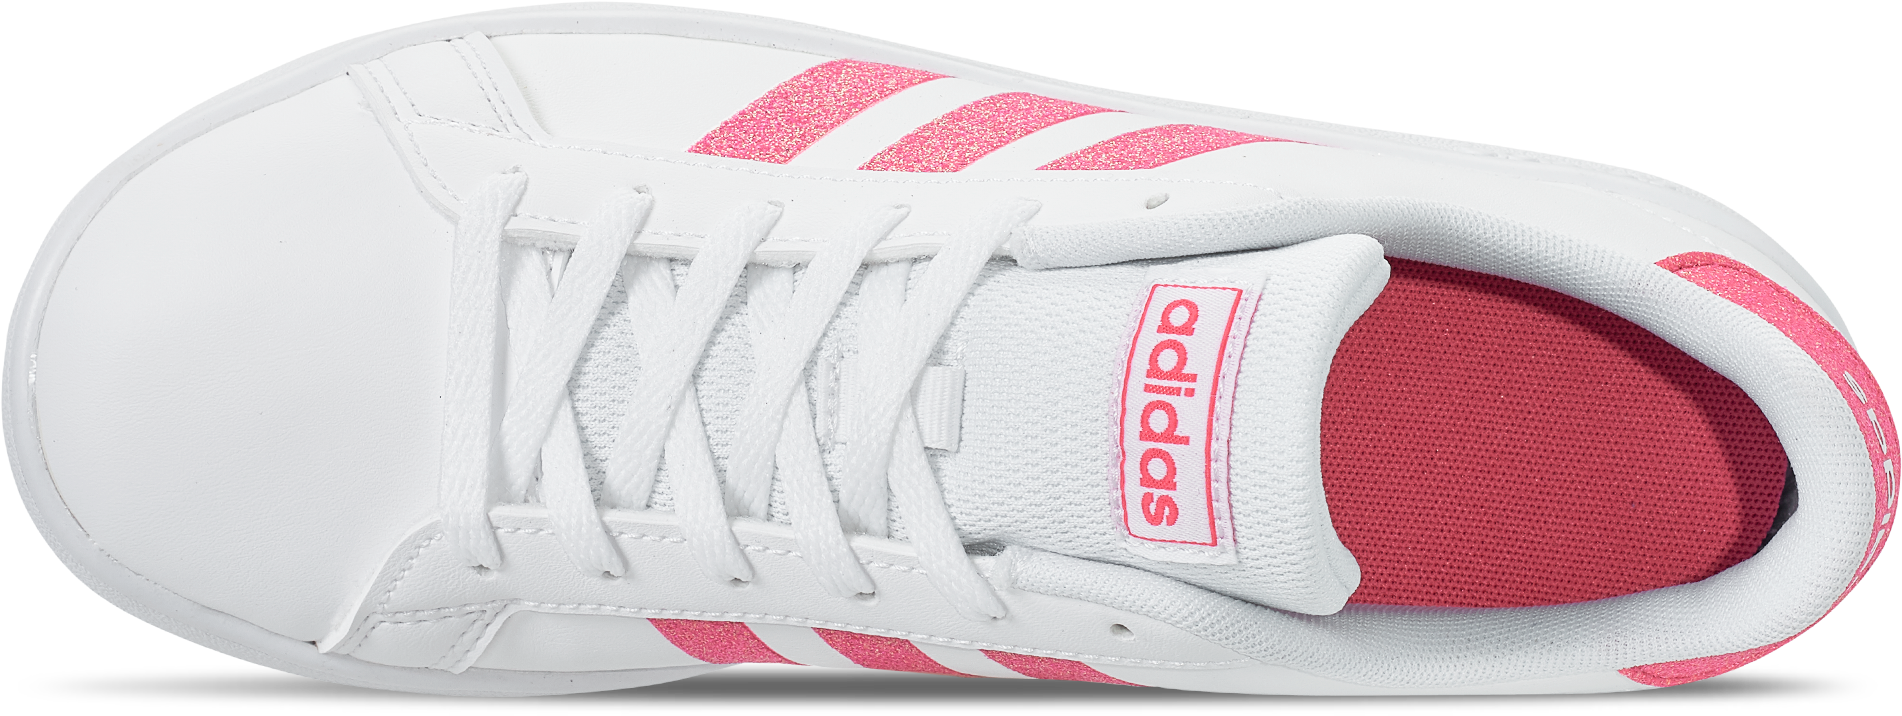 adidas grand court pink glitter